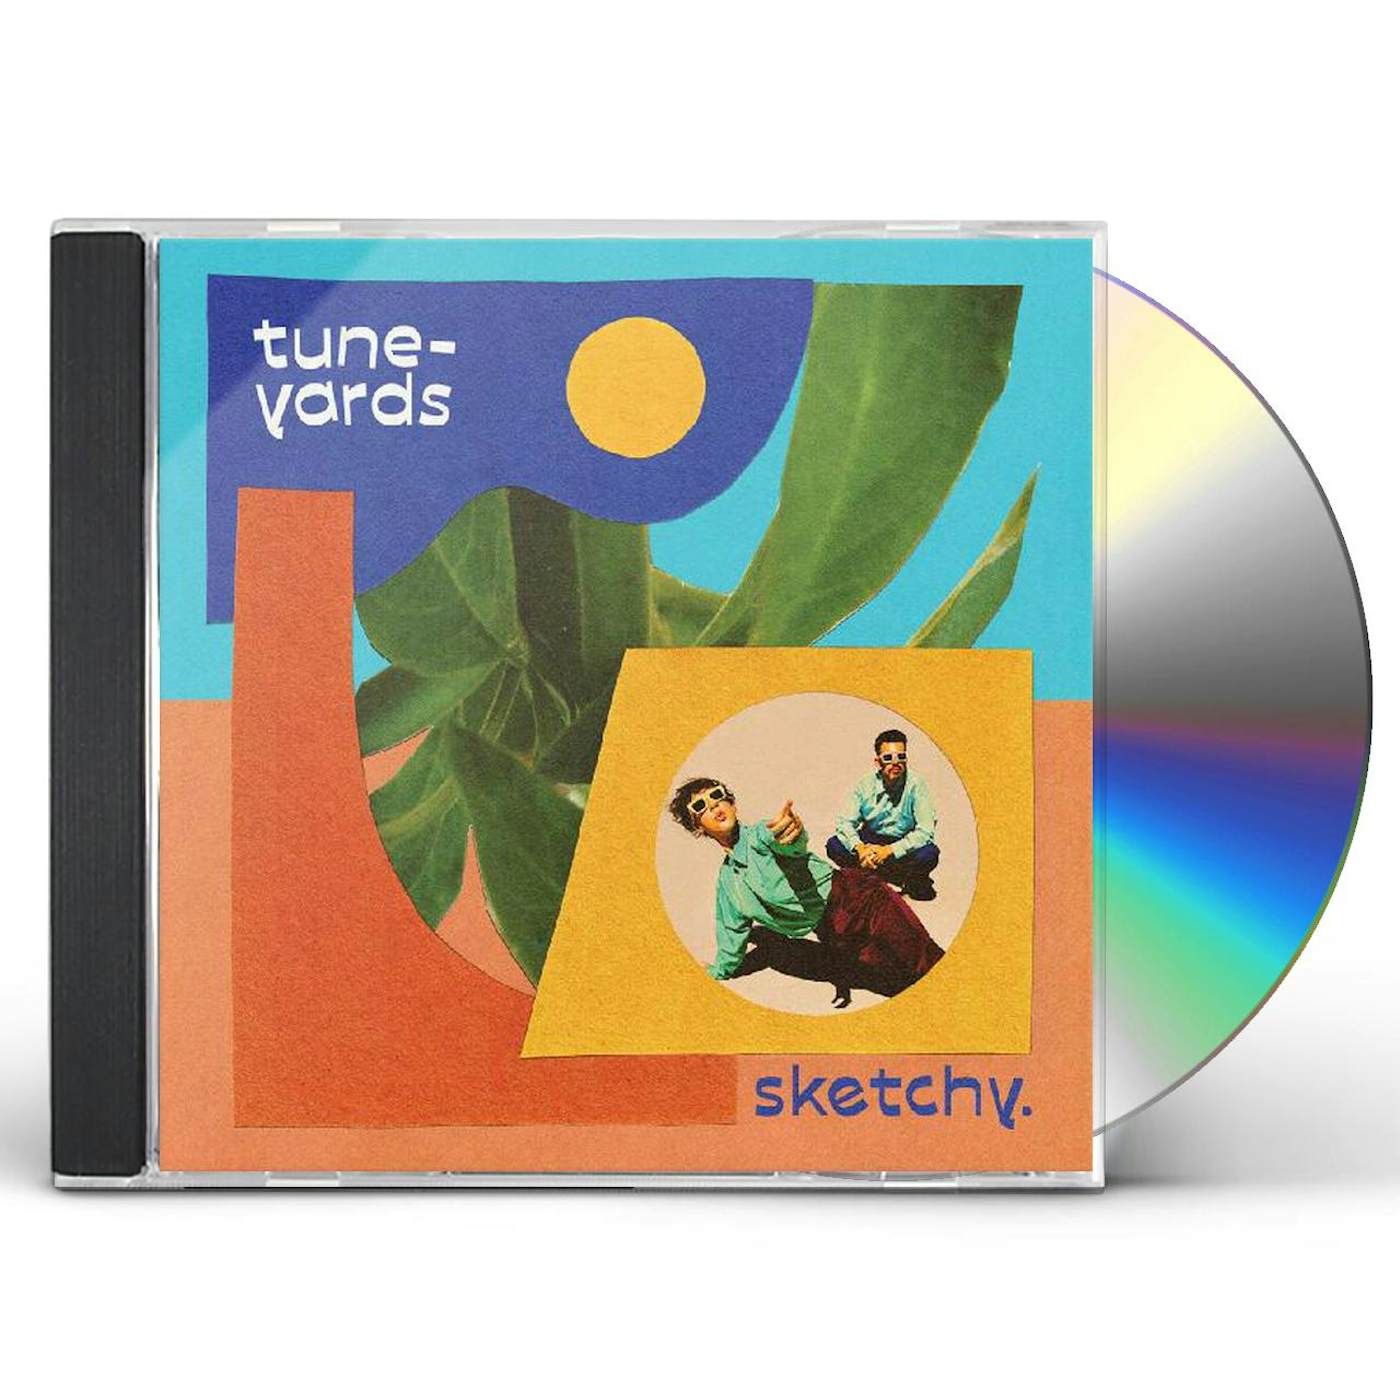 Tune-Yards SKETCHY. CD